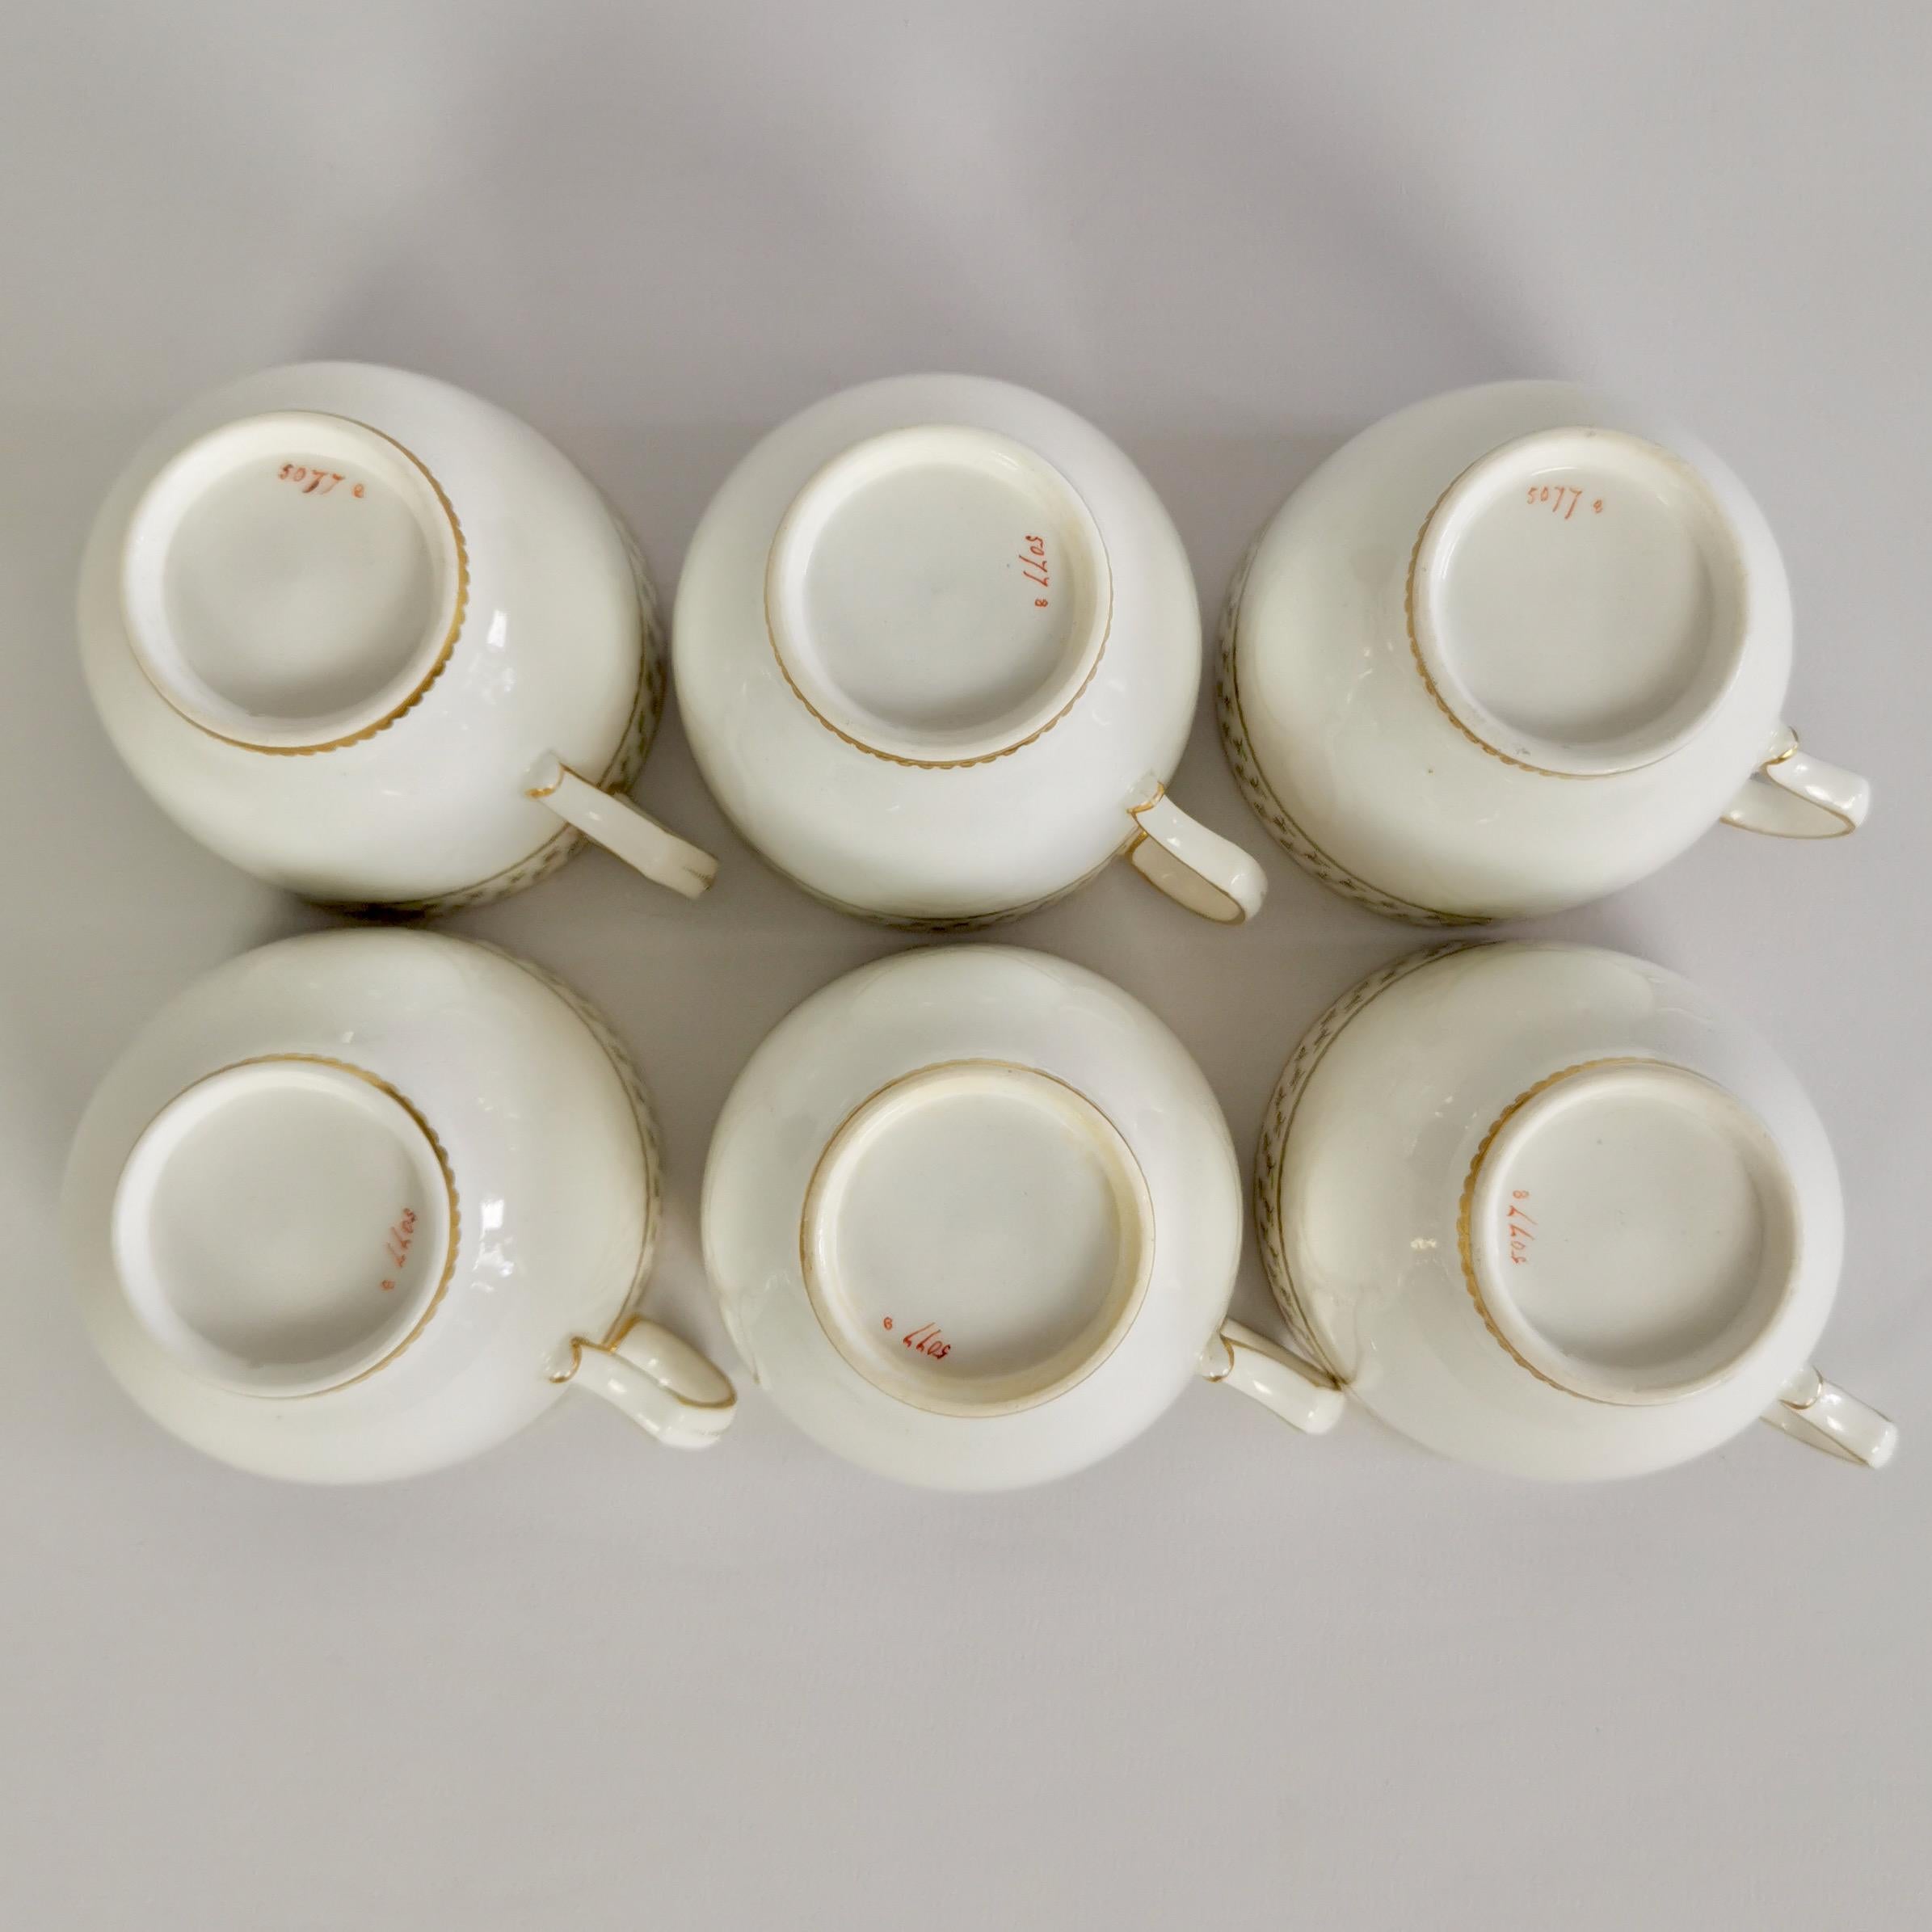 Derby King Street Set of 6 Porcelain Tea Trios, White with Tiny Roses, 1848-1862 11